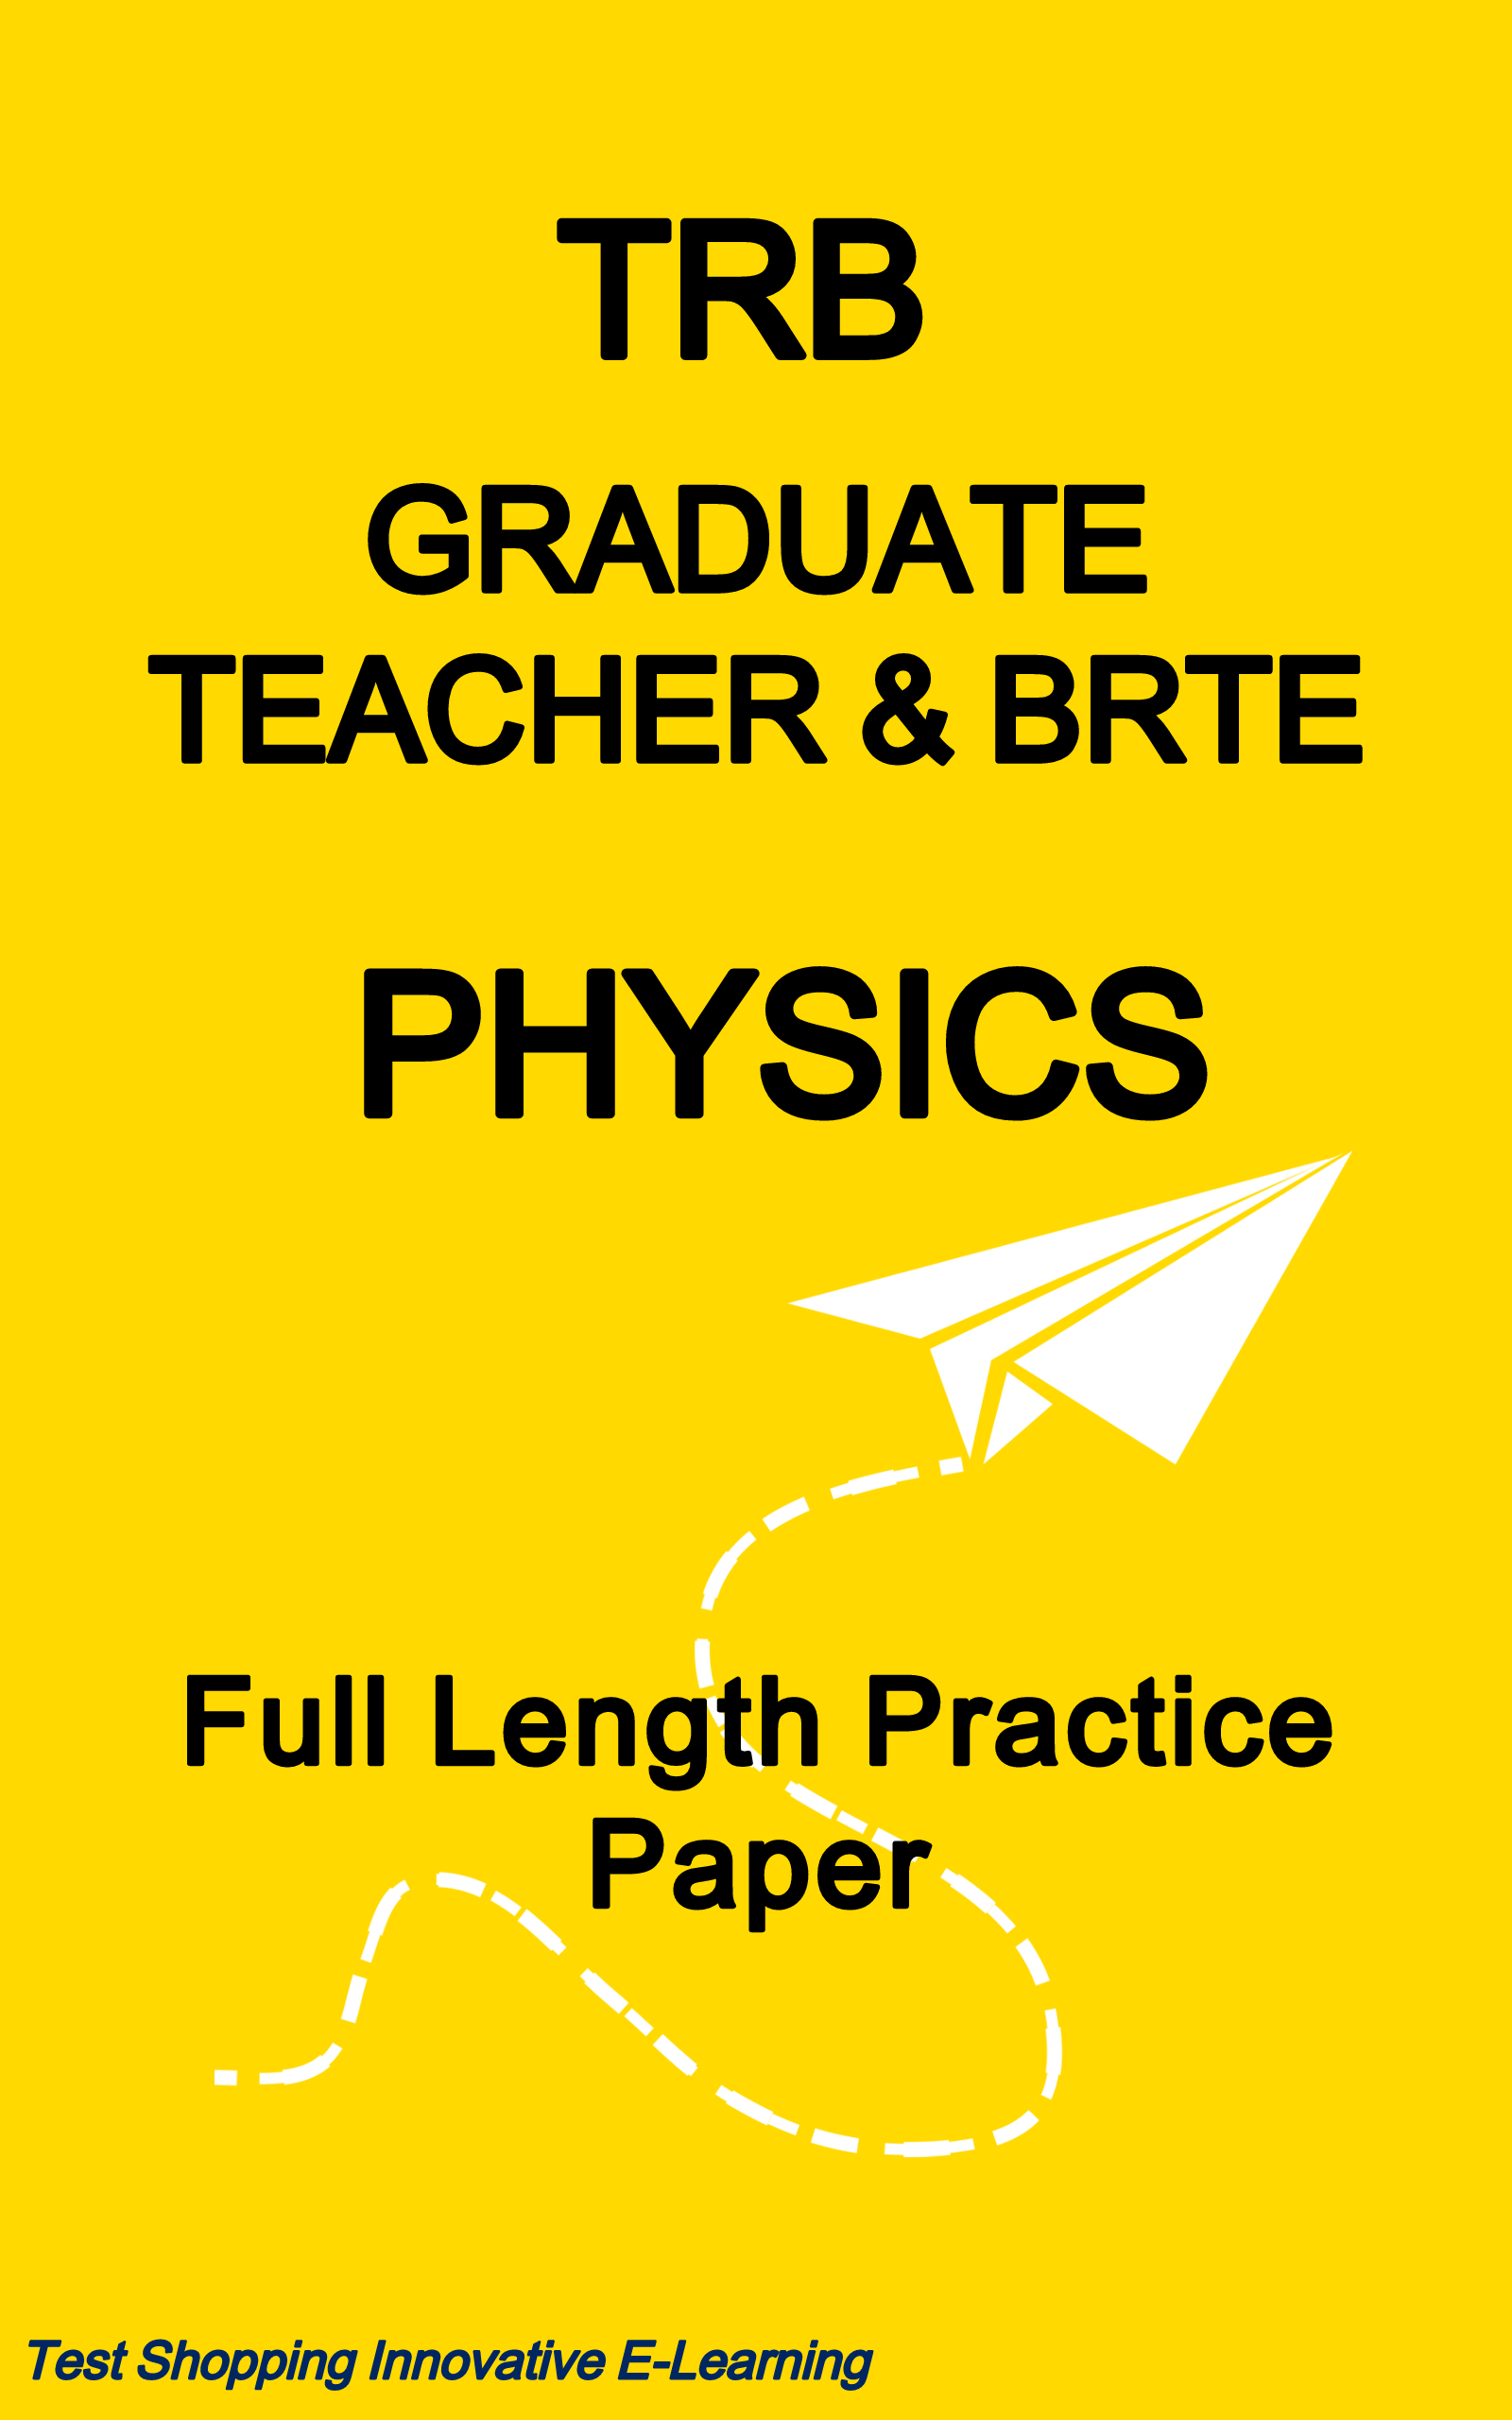 TRB Graduate Teacher and BRTE Full Length Practice Paper for Physics